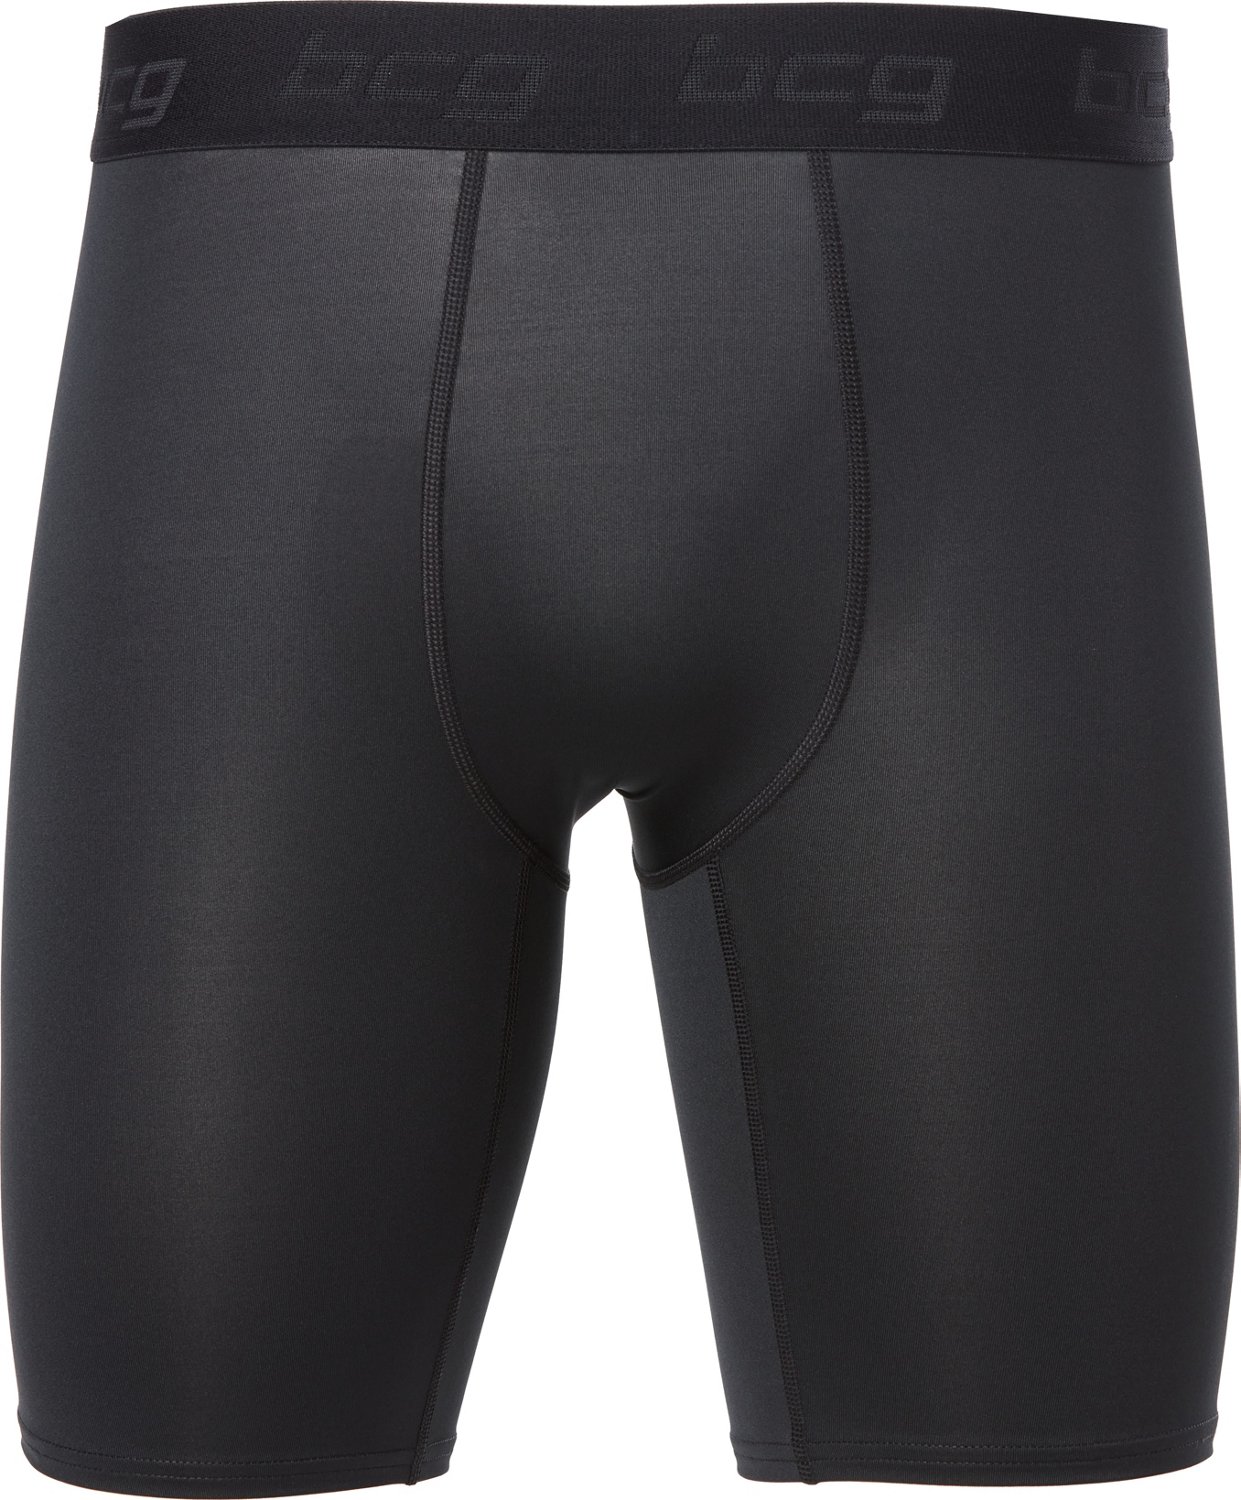 Men's Performance Compression Underwear - Boxer Brief – SWAV Apparel